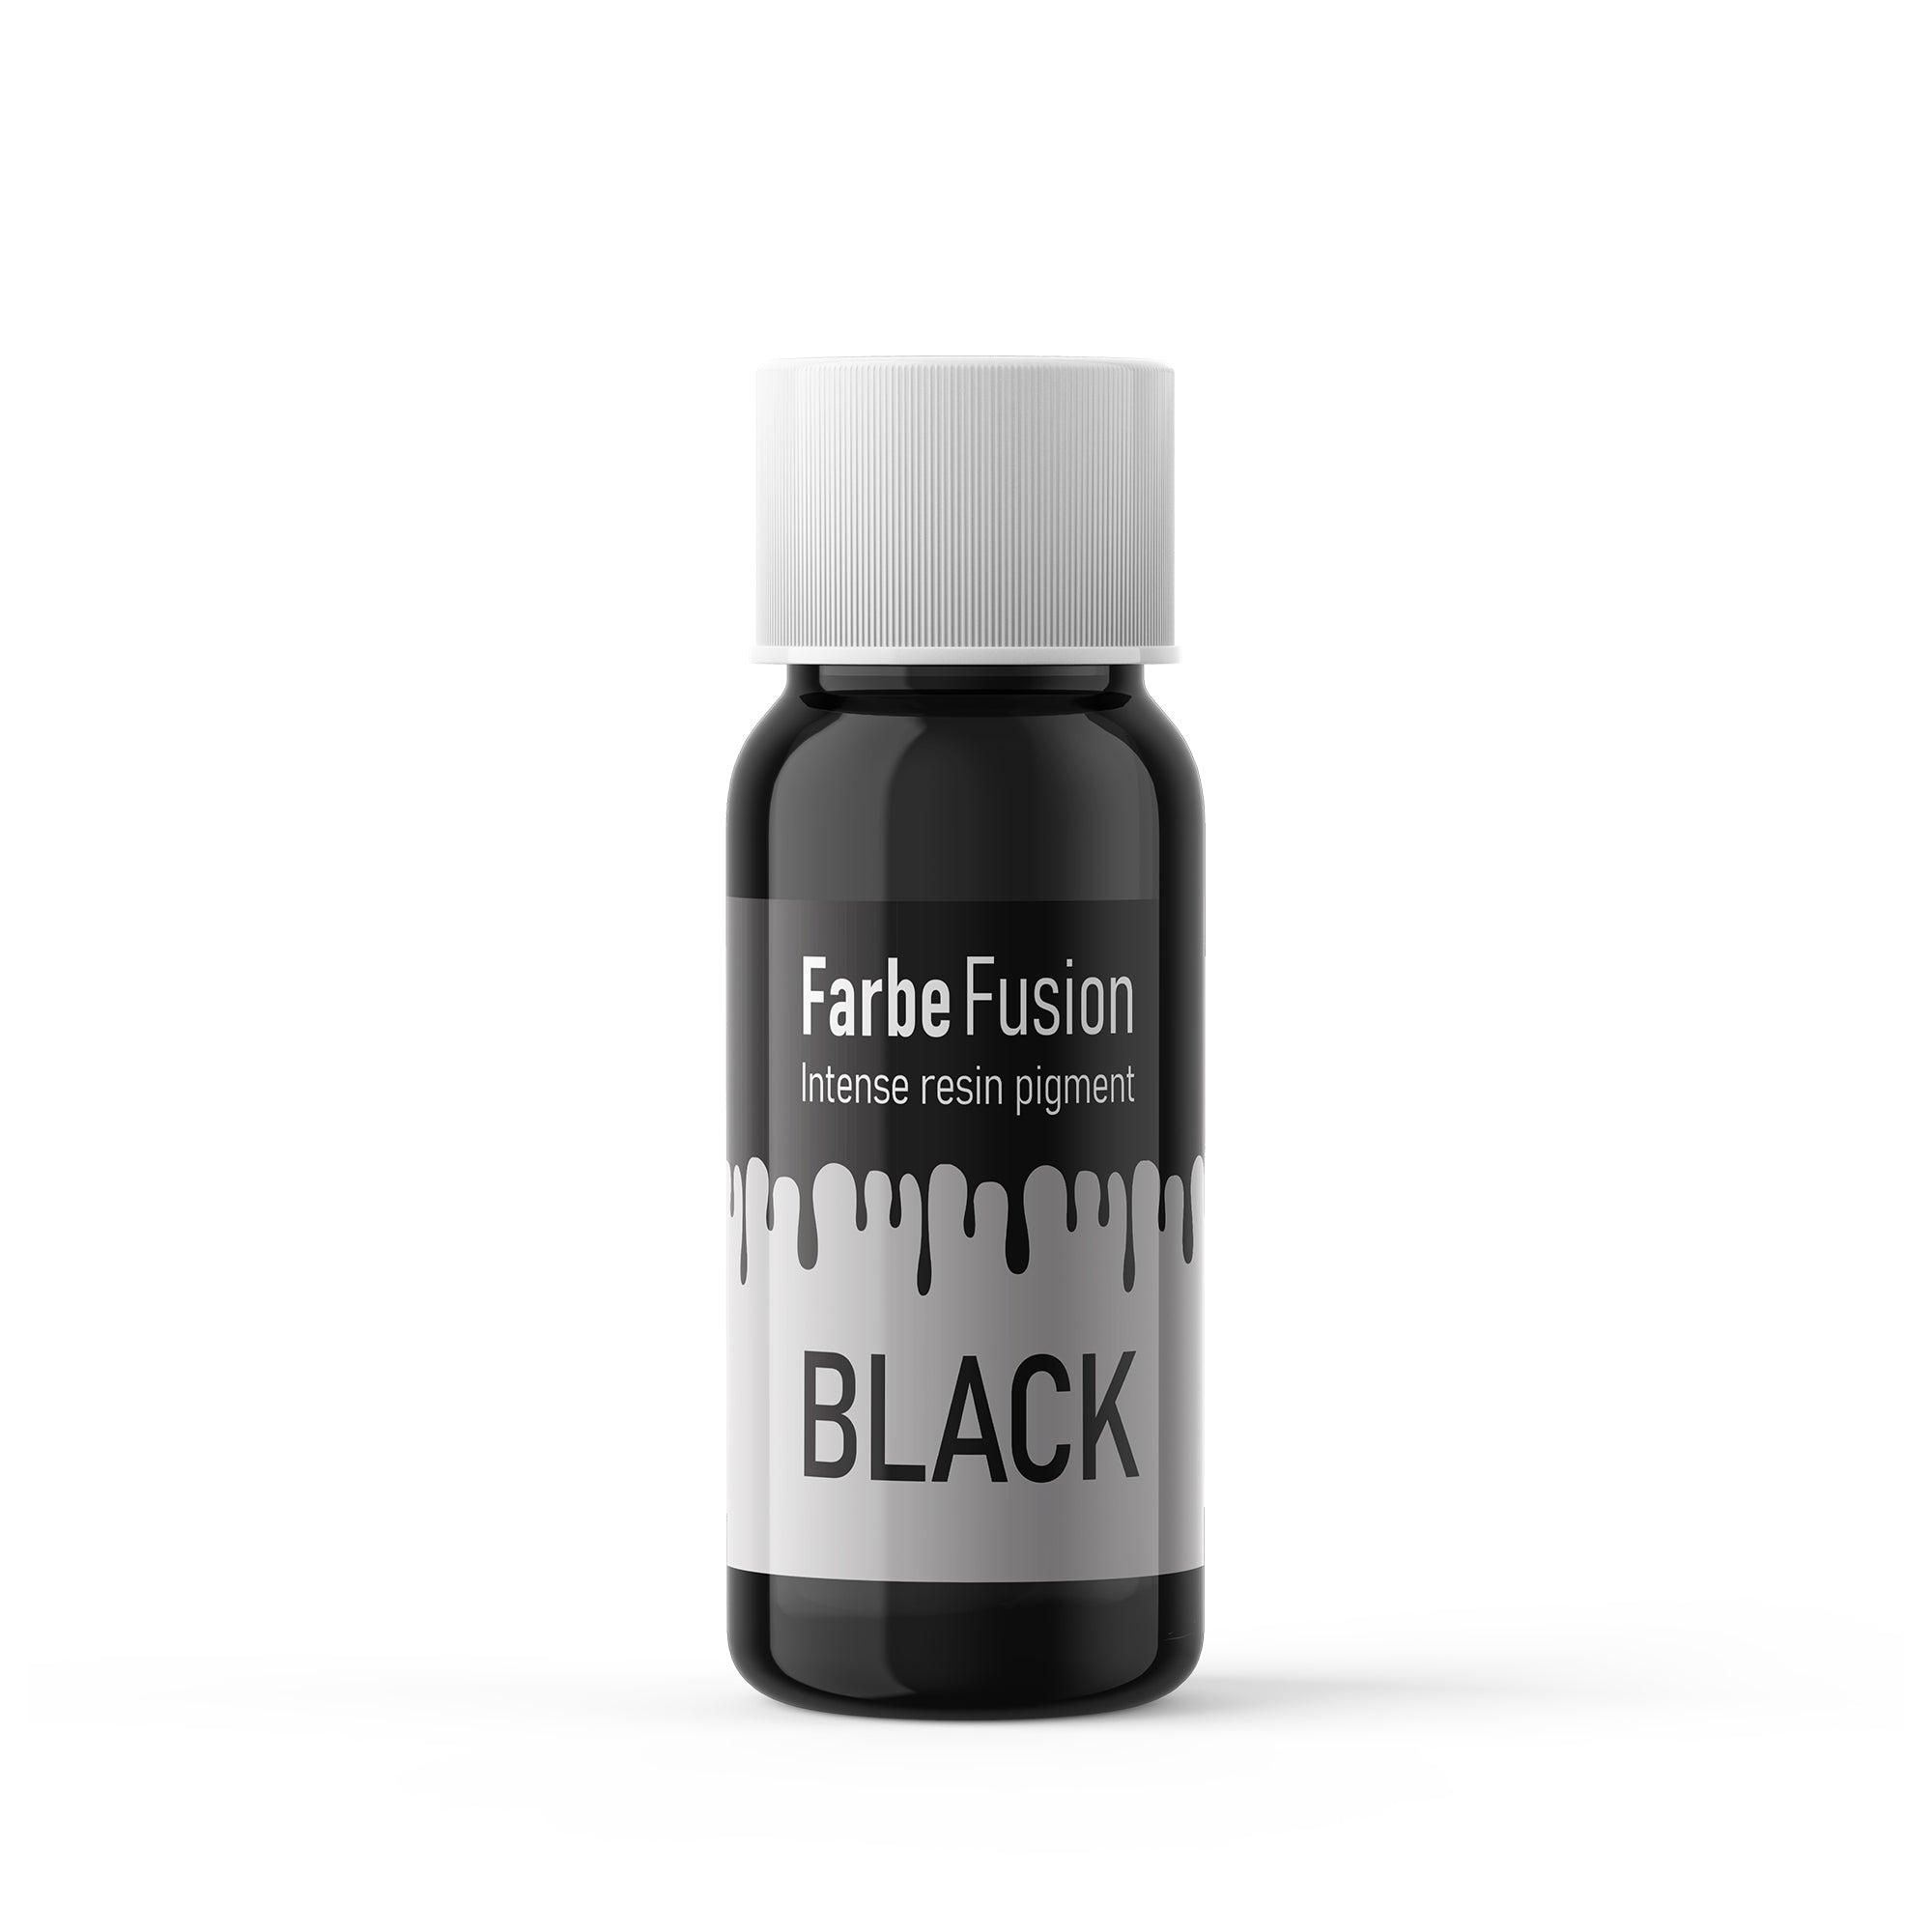 Woodberg - Farbe Fusion Black Resin Pigment | صبغة ريزن سائلة لون أسود 35 مل 